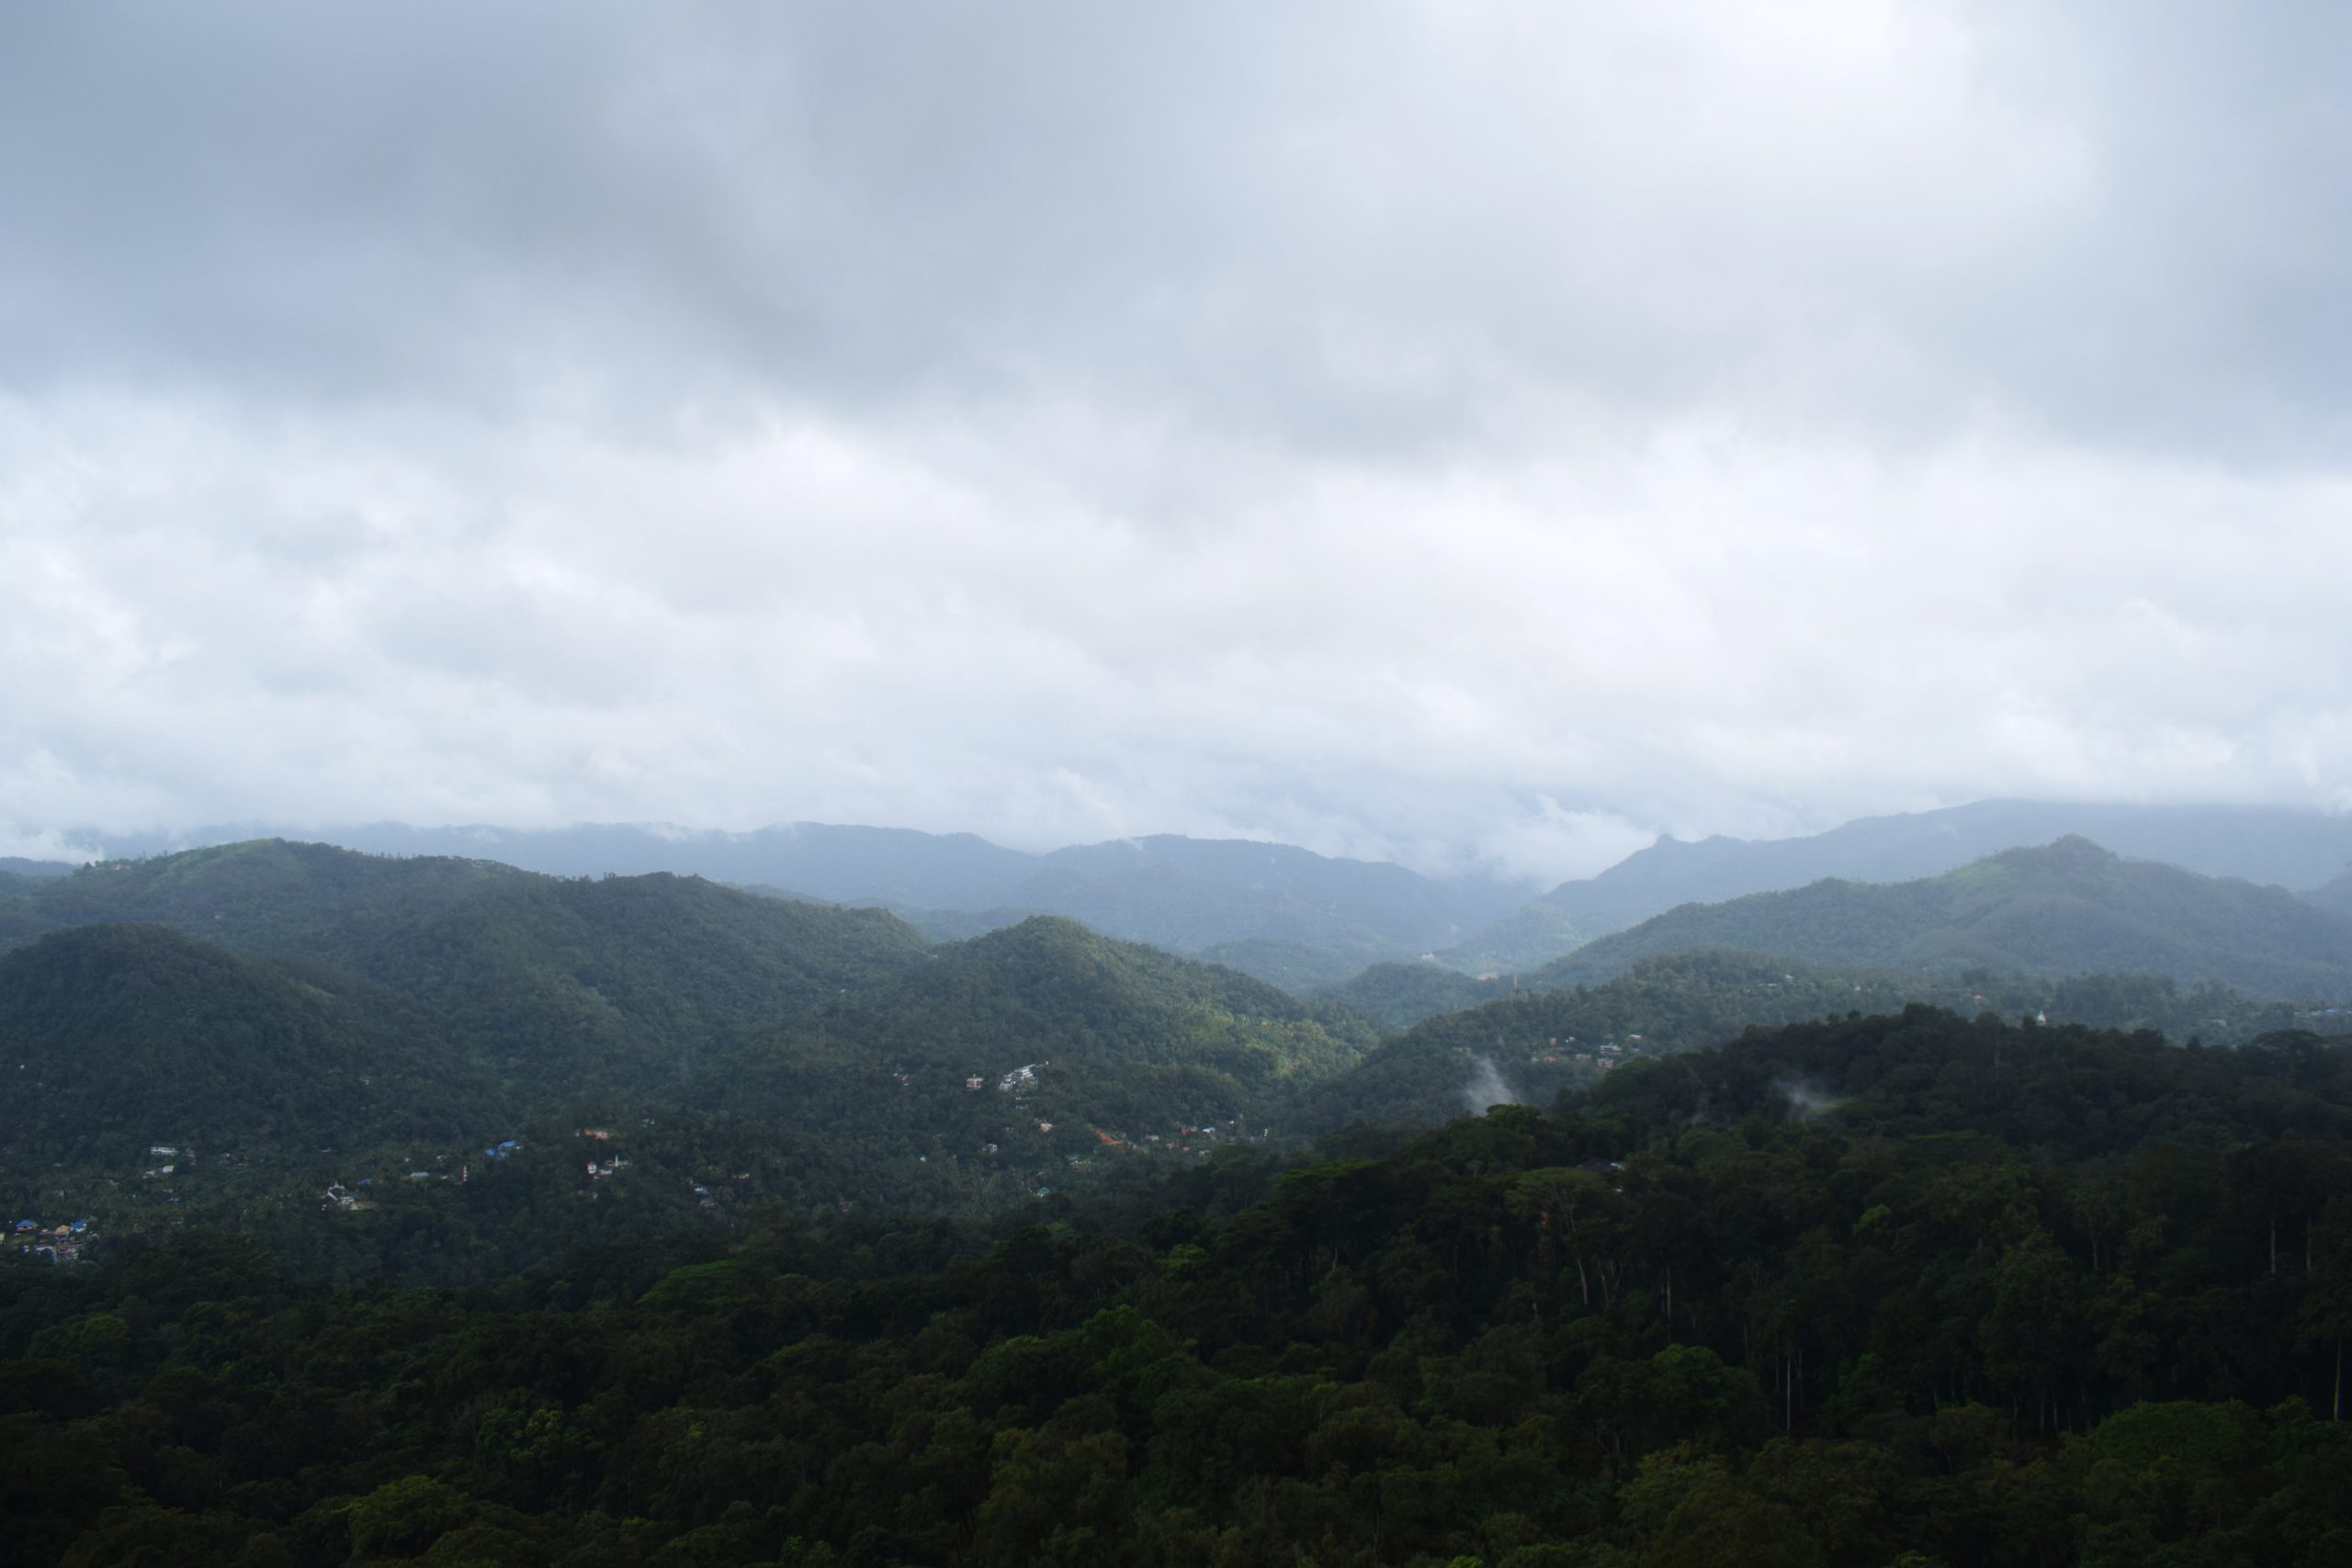 Mountain ranges near Munnar in Kerala